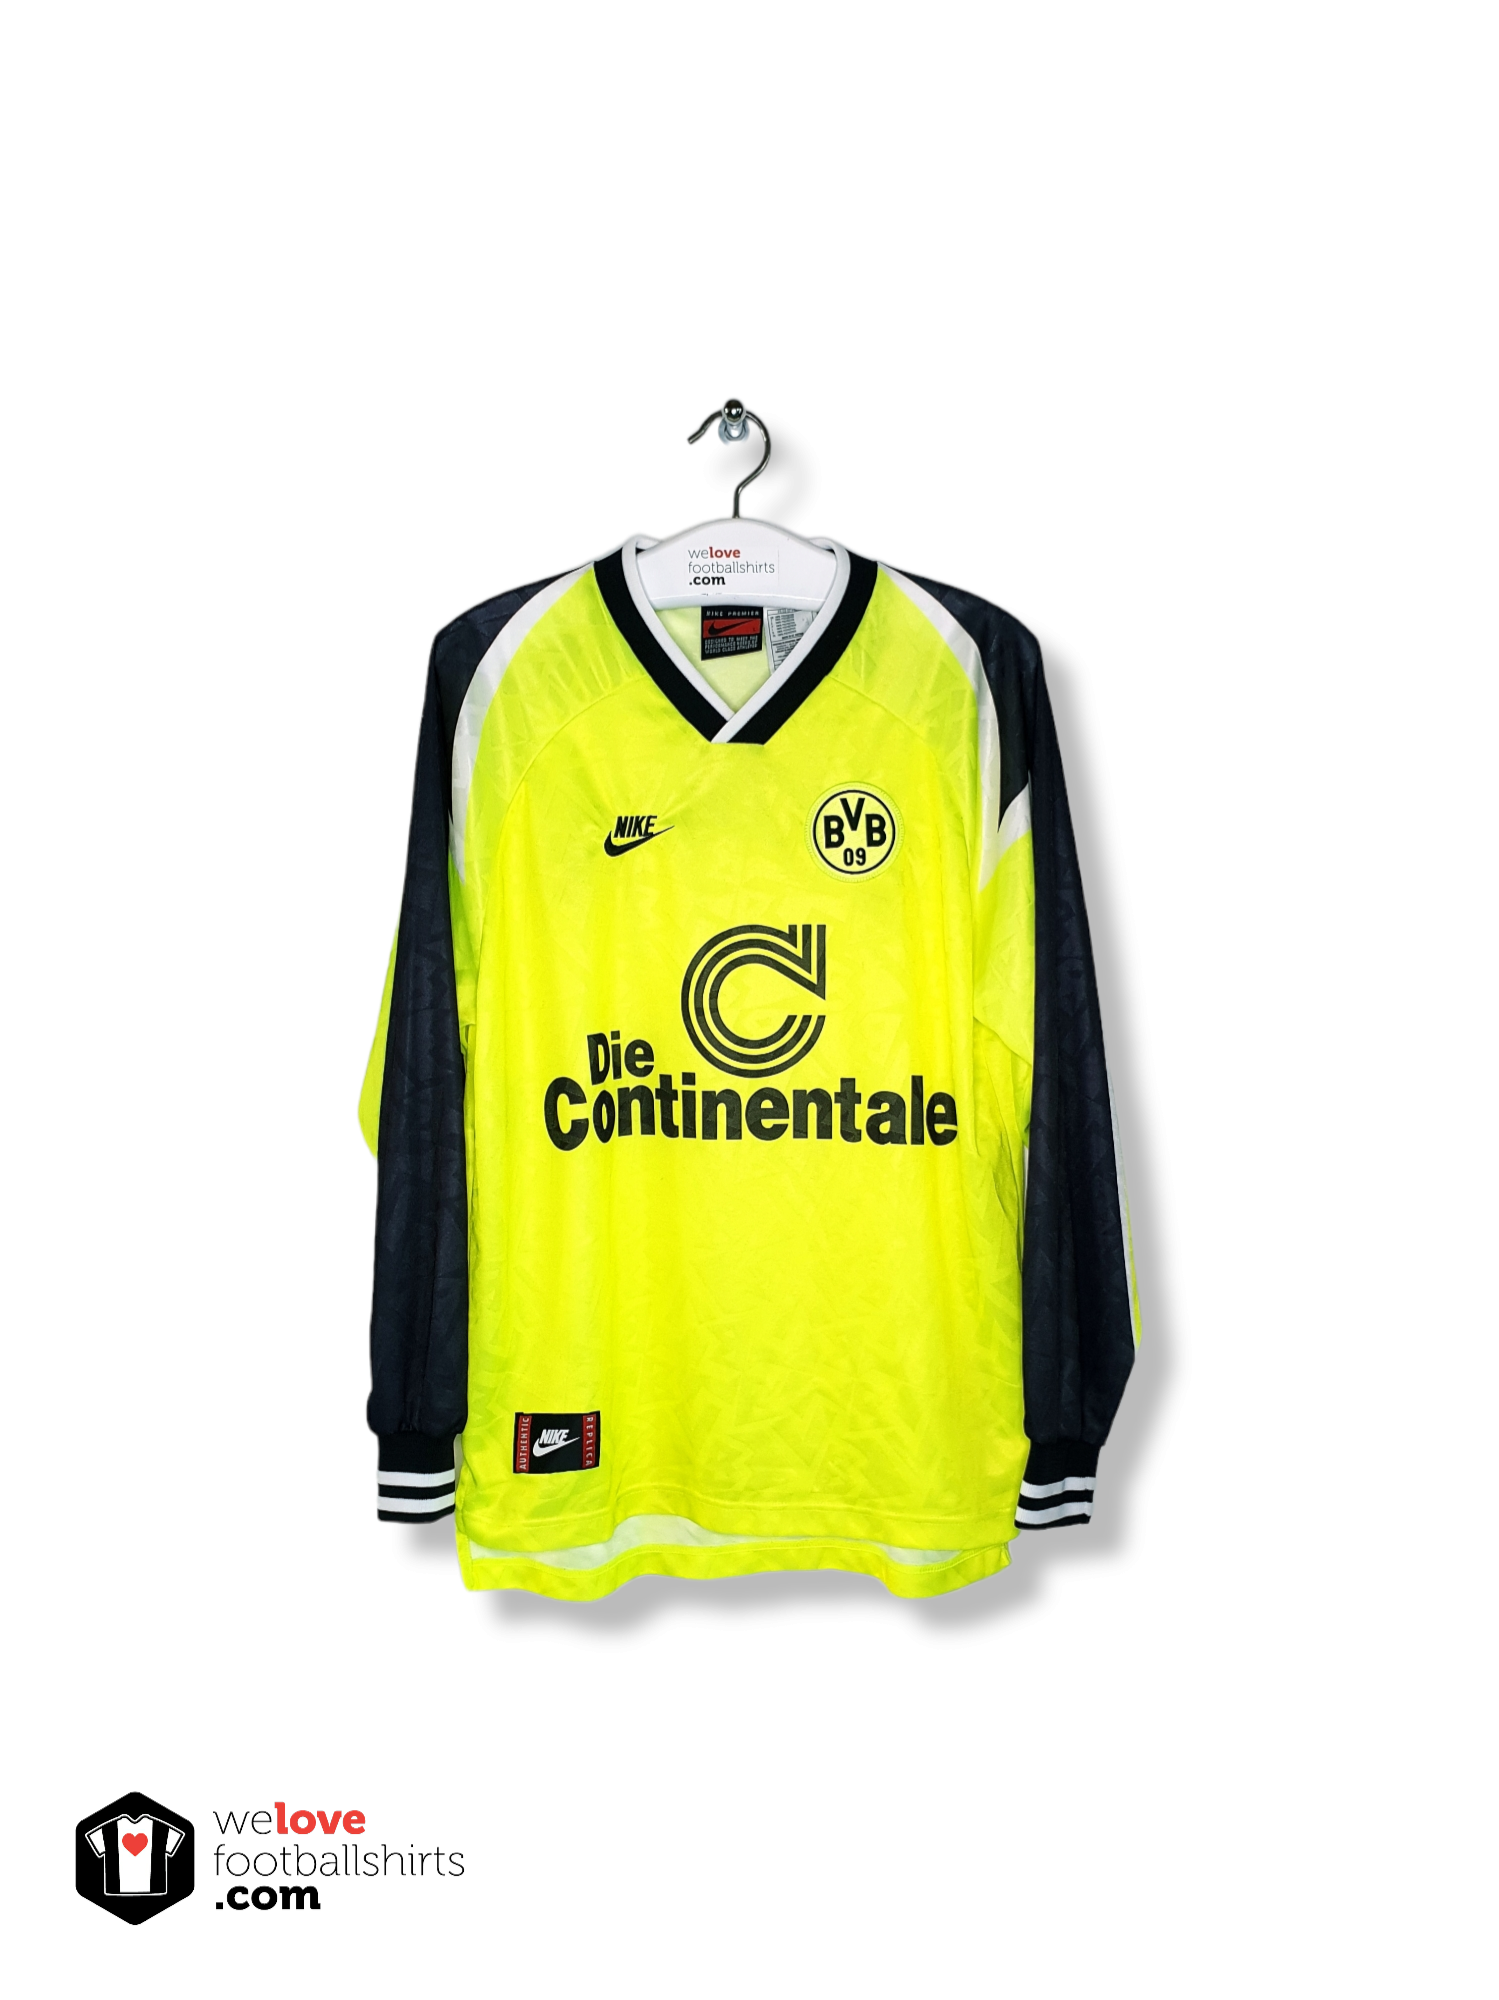 Centimeter beven Biscuit Nike voetbalshirt Borussia Dortmund 1995/96 - Welovefootballshirts.com